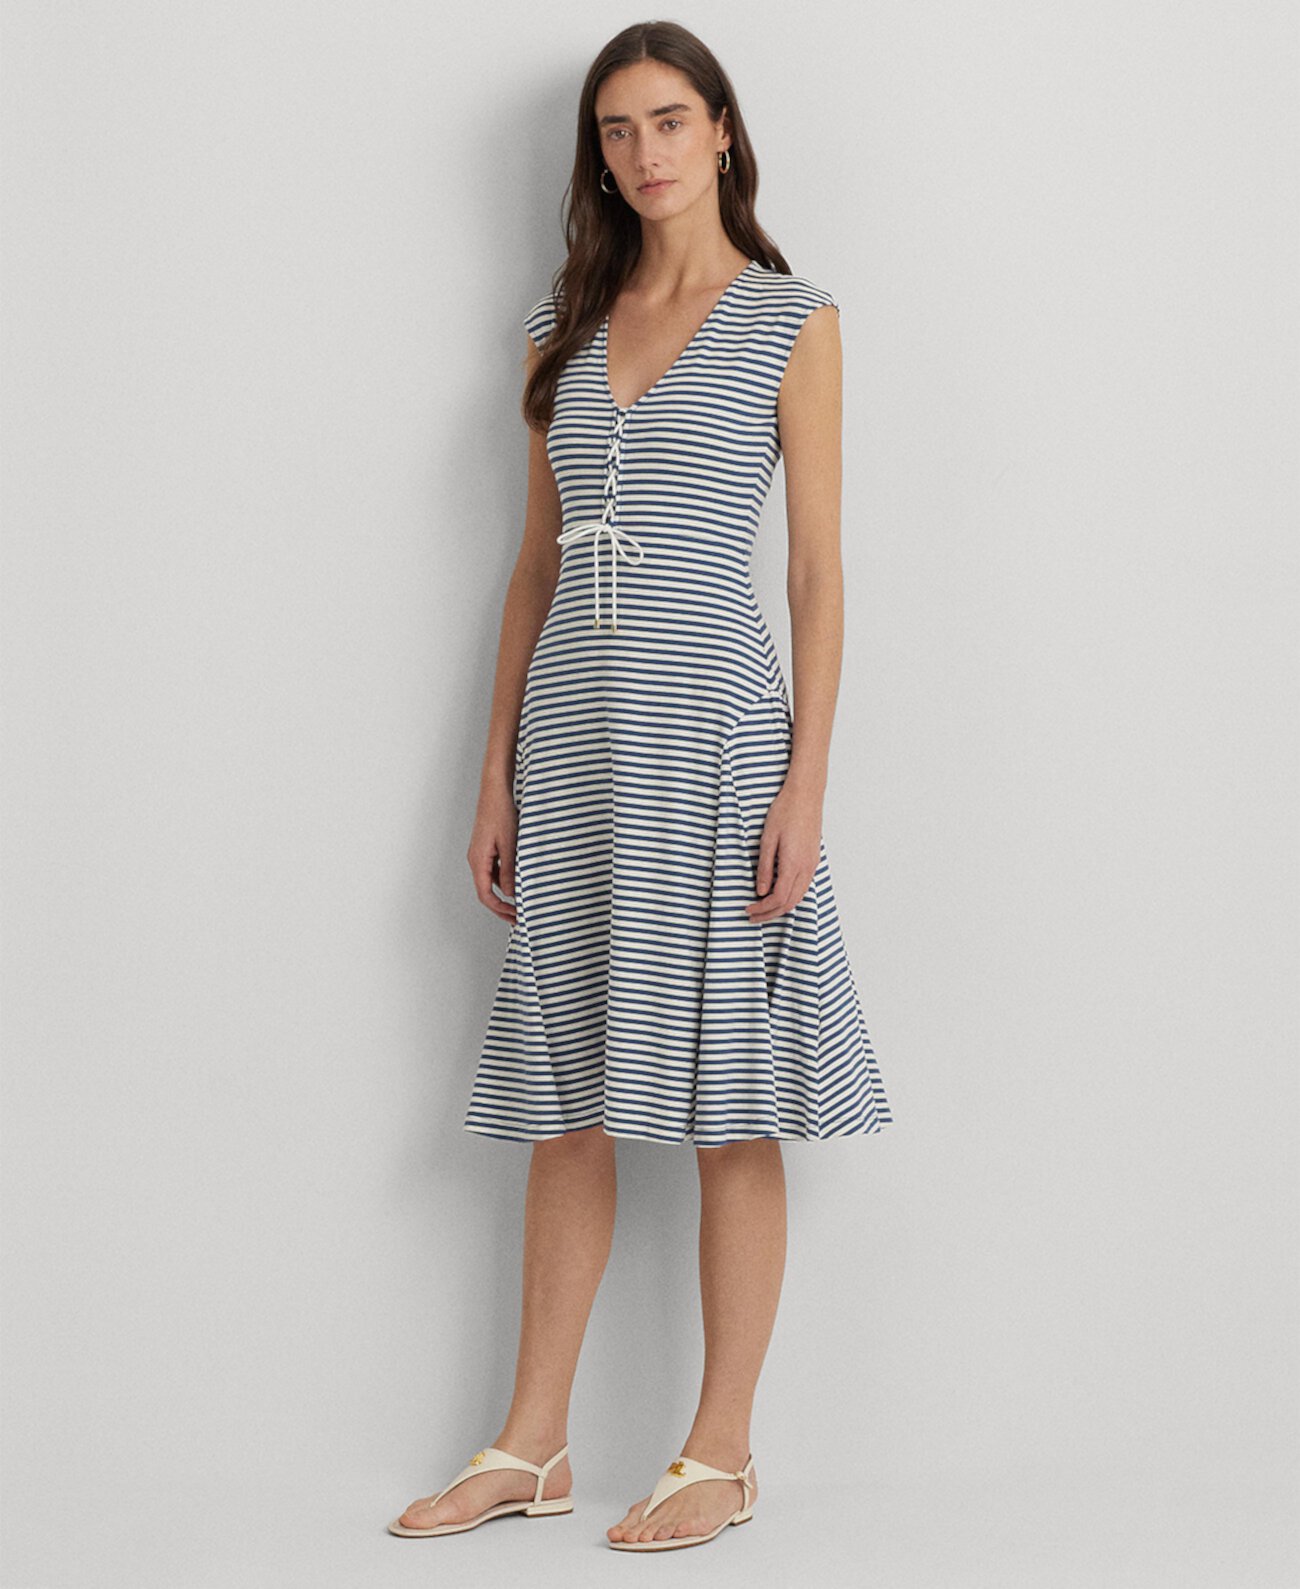 Women's Striped Lace-Up Dress LAUREN Ralph Lauren